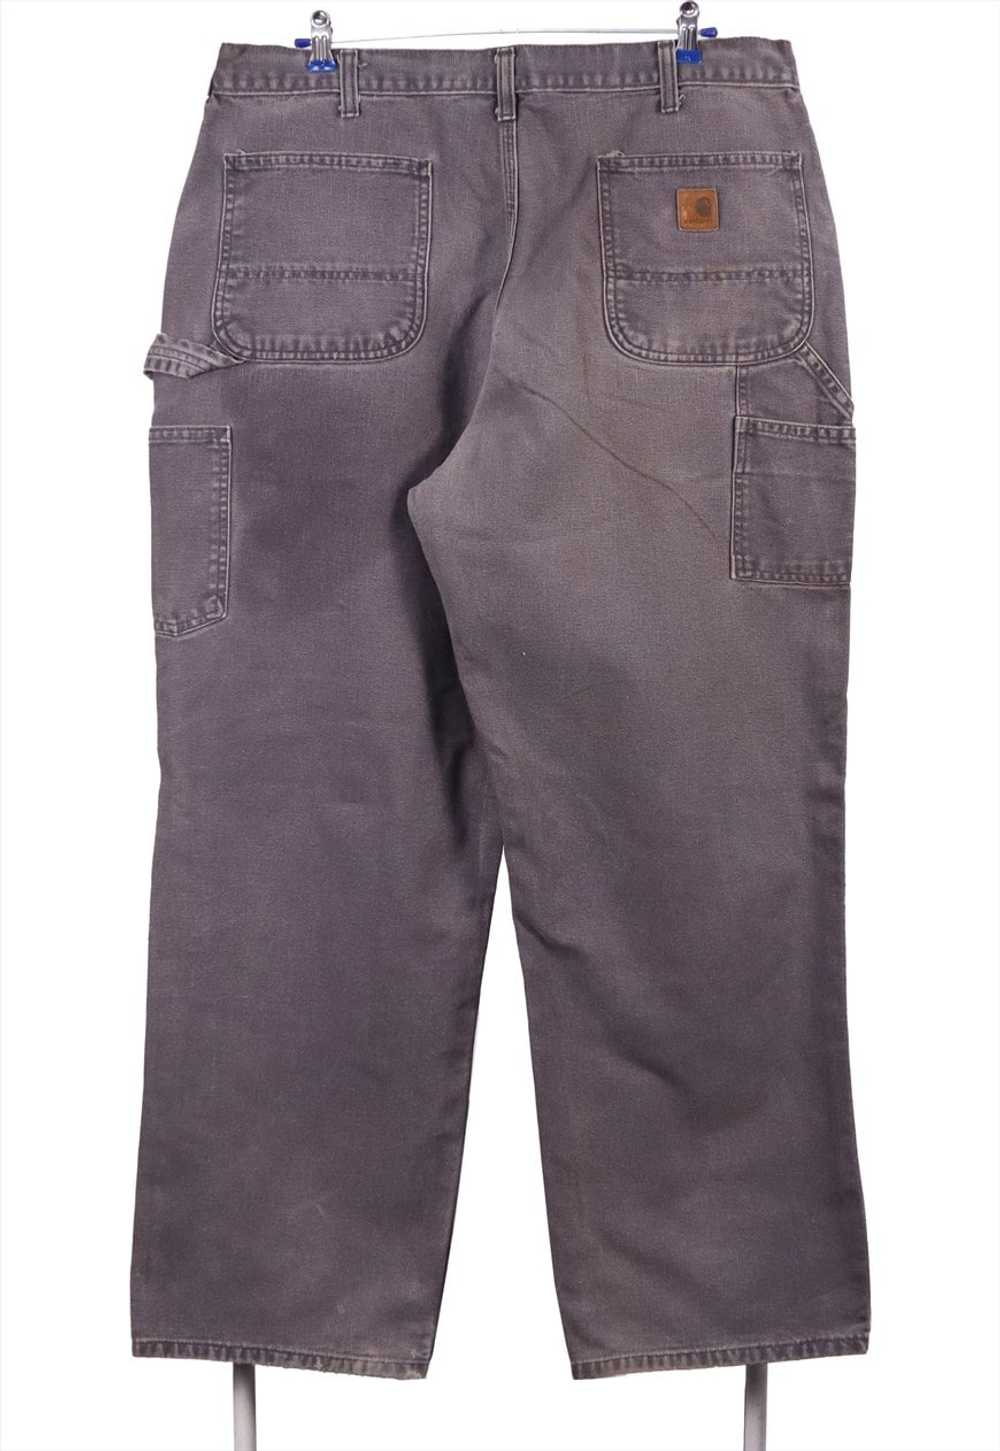 Vintage 90's Carhartt Trousers / Pants Cargo Carp… - image 1